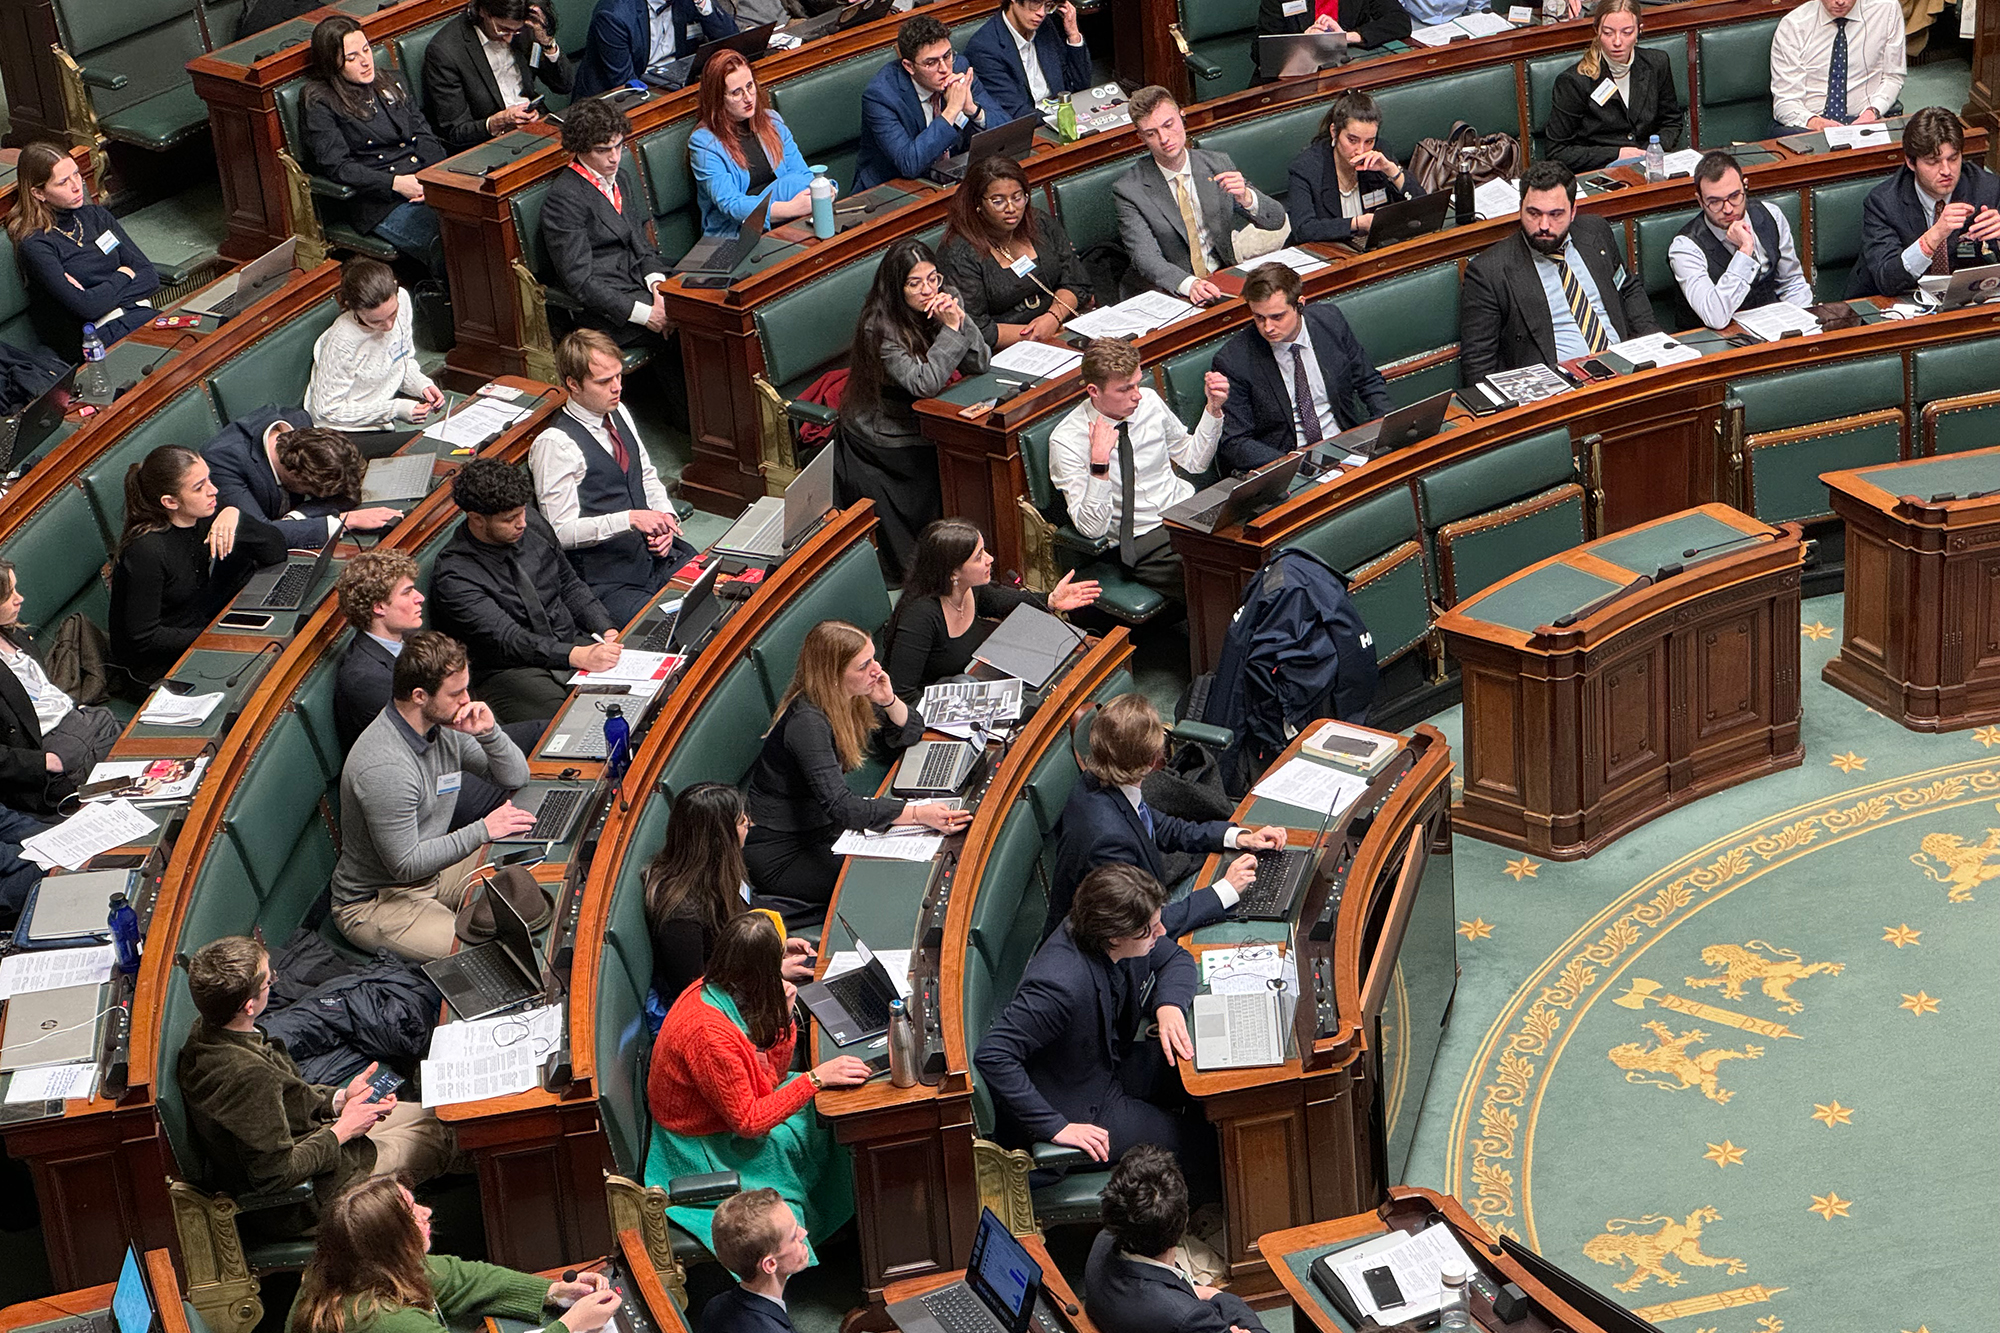 Realitätsnahe Simulation: Das Jugendparlament tagt in der Kammer in Brüssel (Bild: Manuel Zimmermann/BRF)